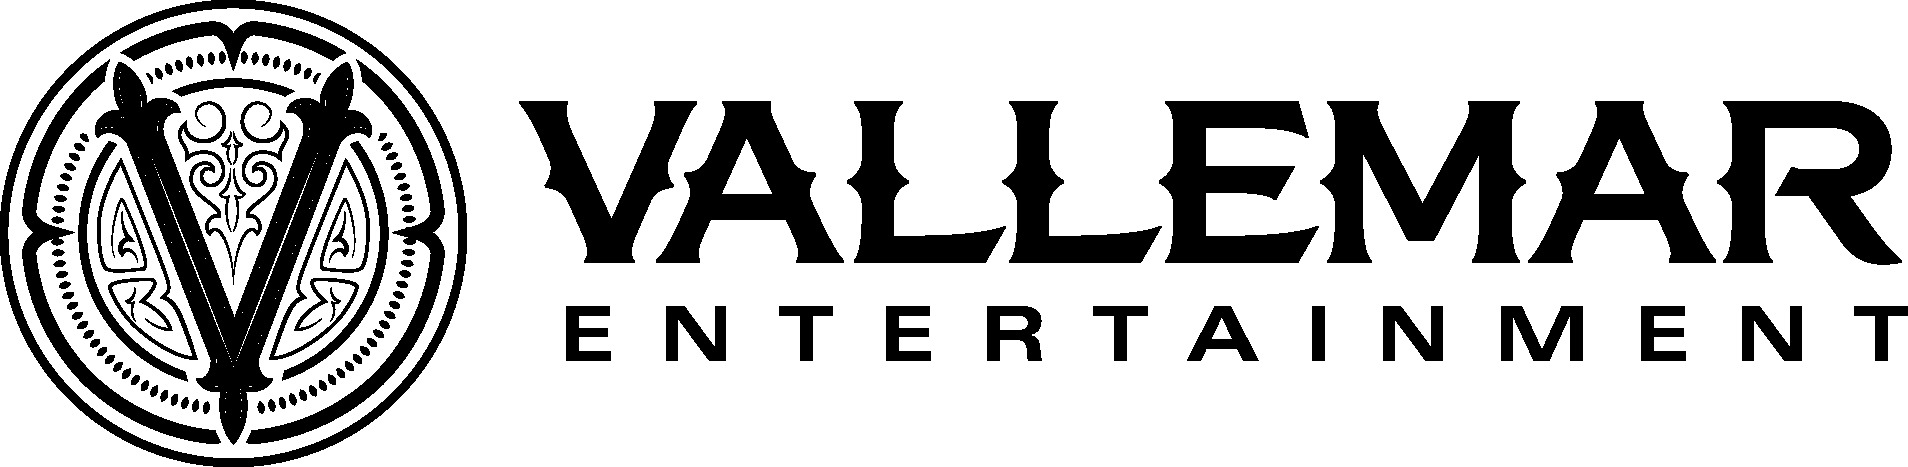 Vallemar Entertainment Banner logo